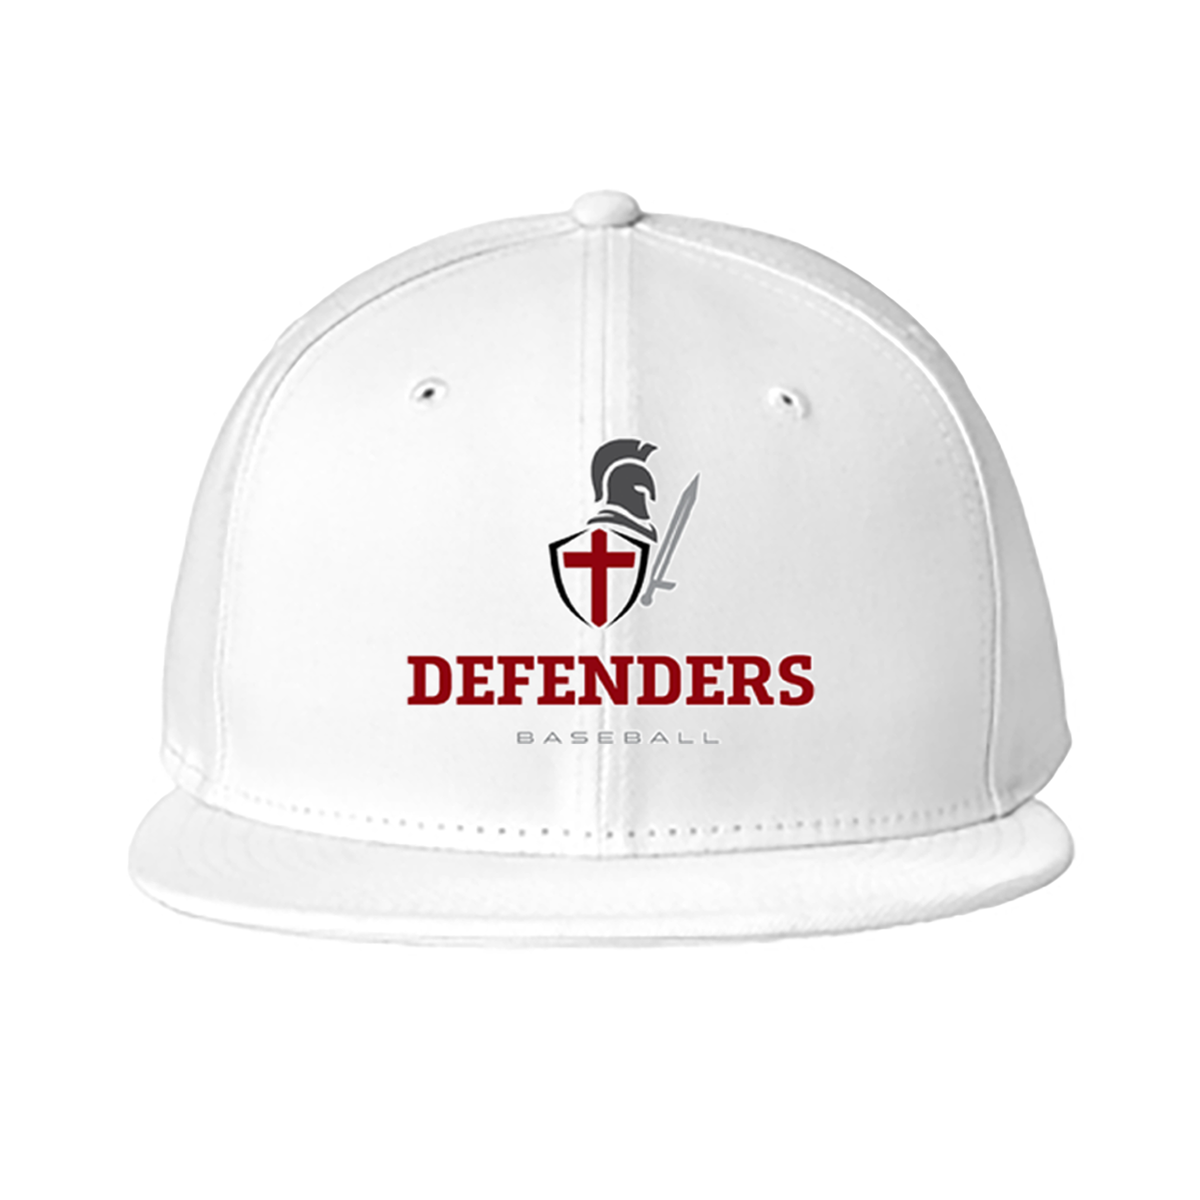 Defenders Baseball New Era Standard Fit Flat Bill Snapback Cap